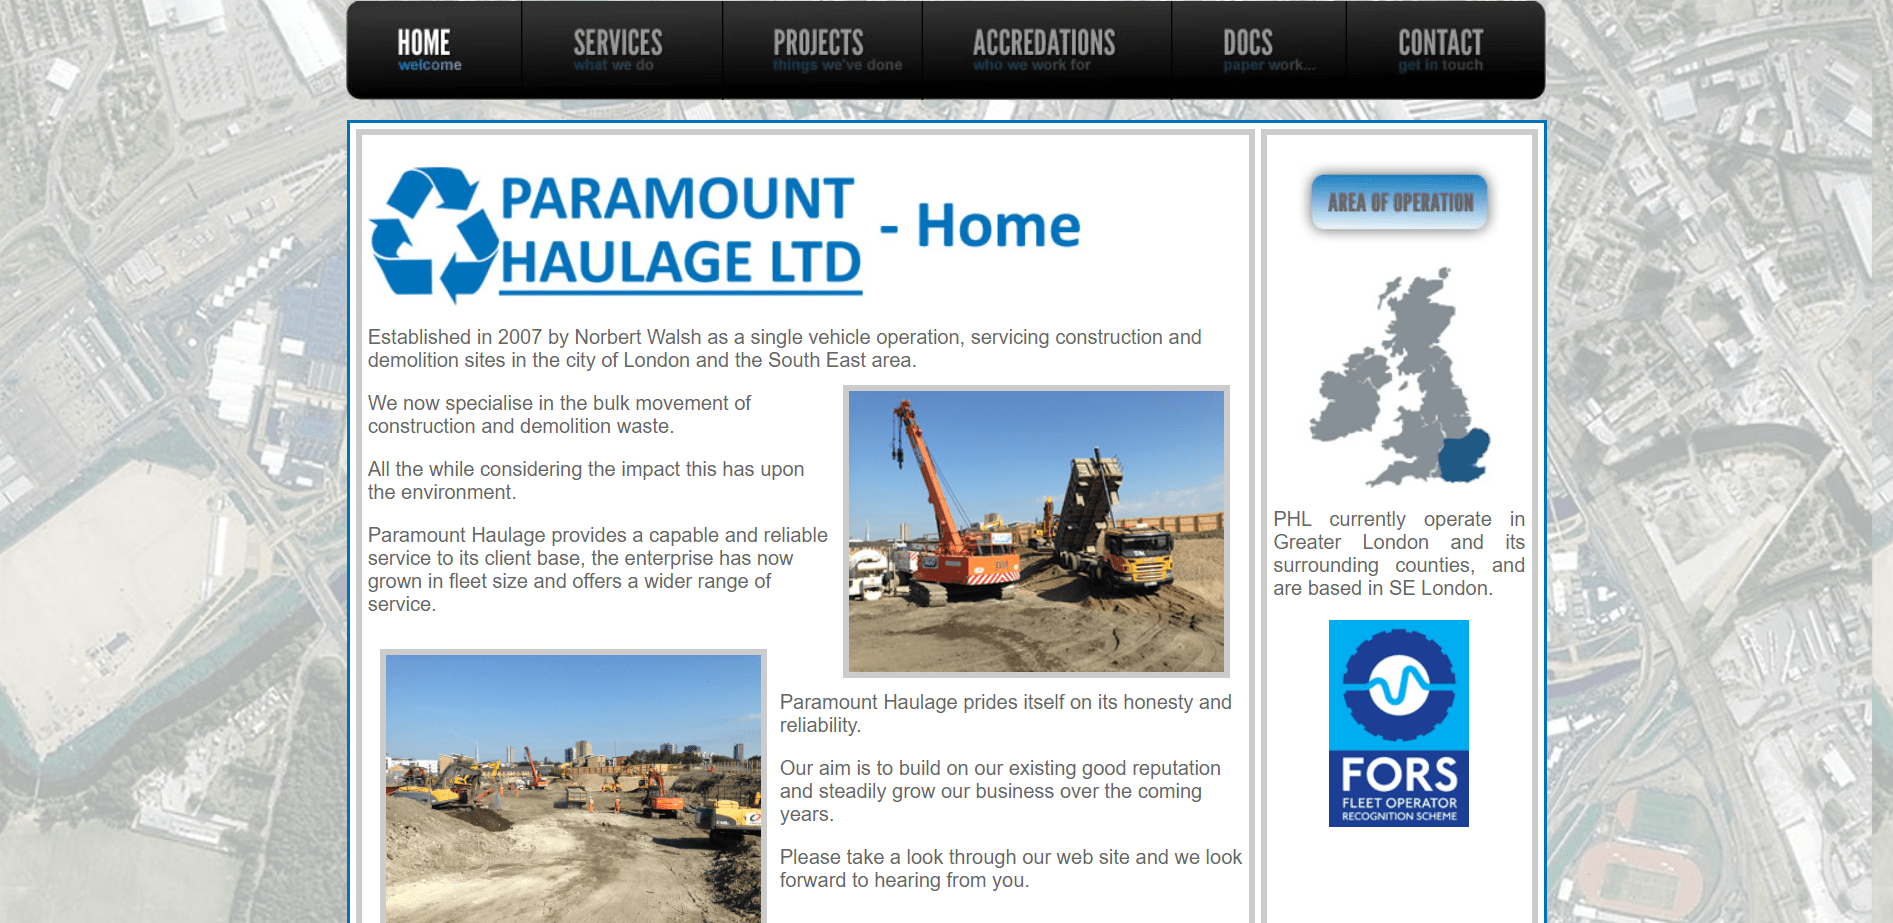 Paramount Haulage Ltd